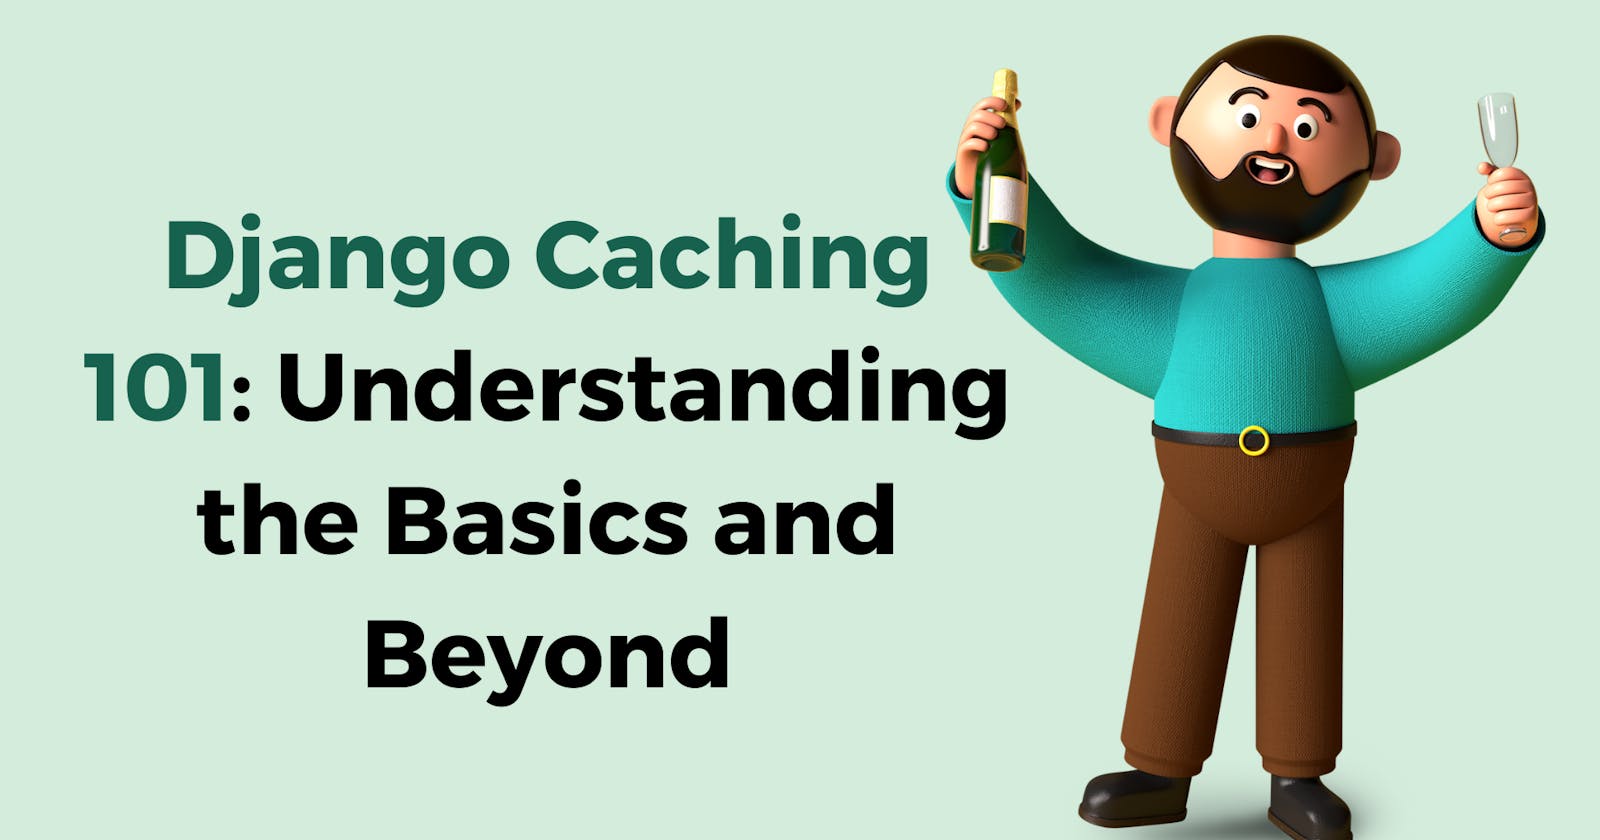 Django Caching 101: Understanding the Basics and Beyond